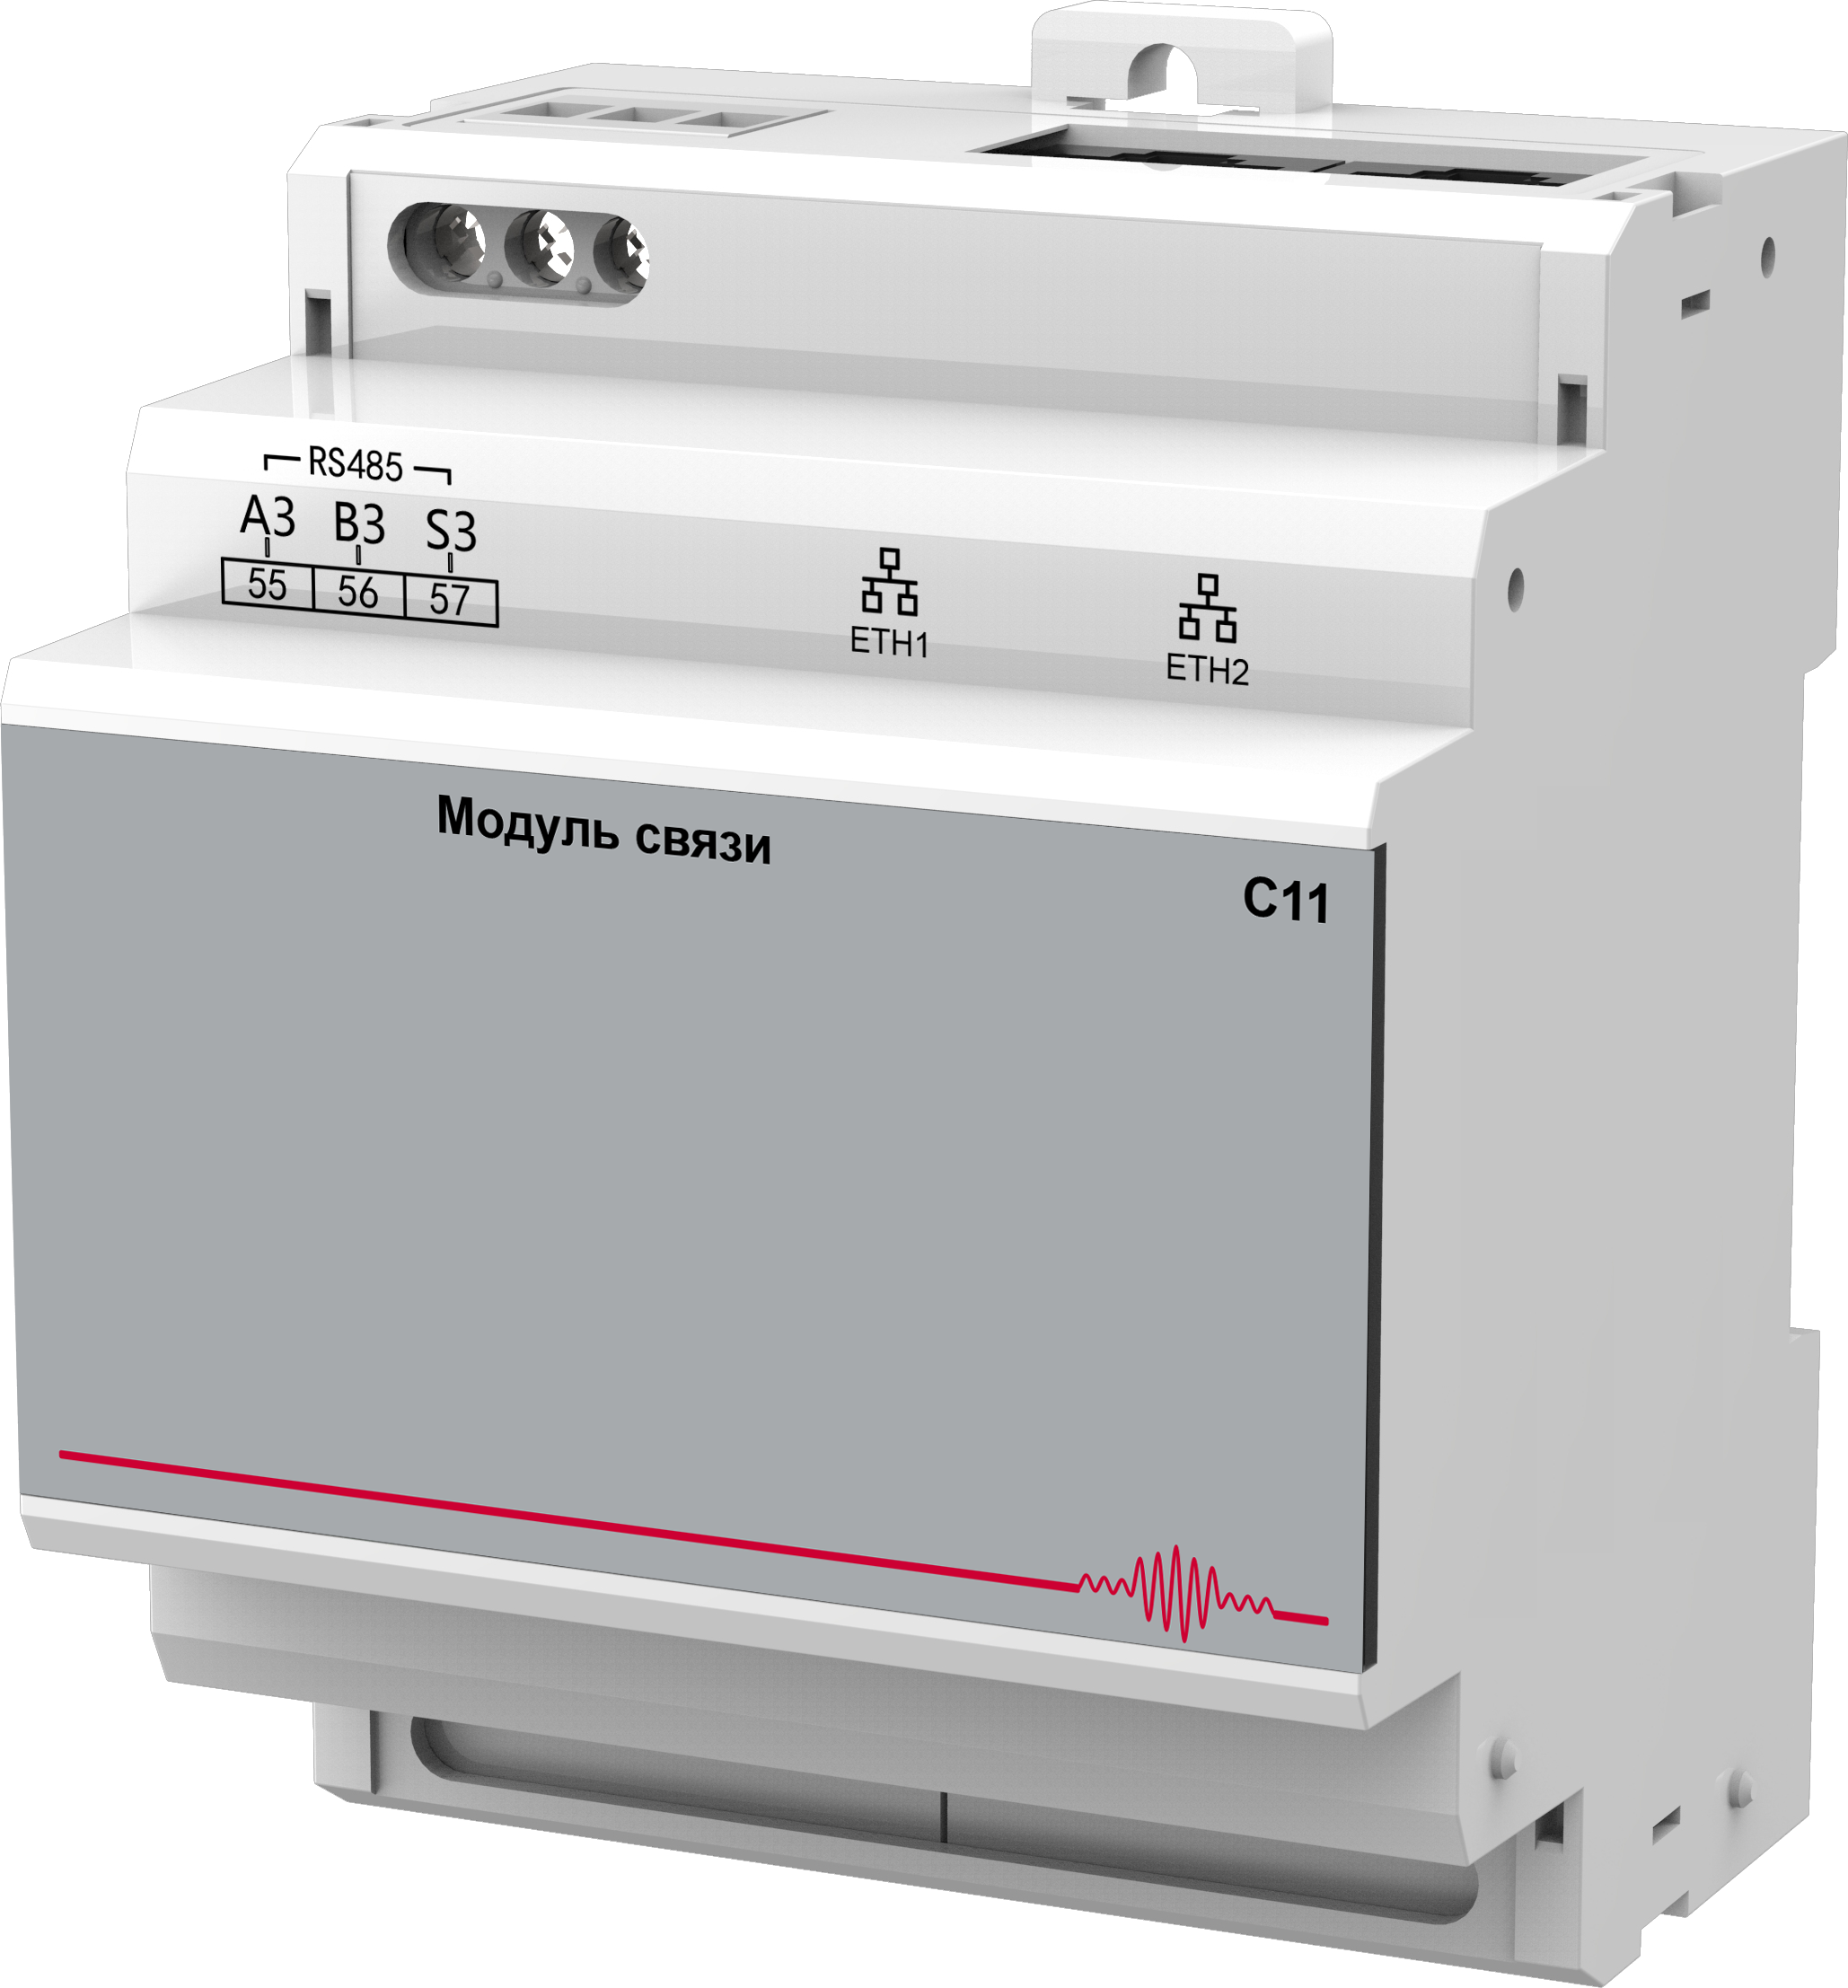 C11 - модуль связи (Ethernet, RS-485)